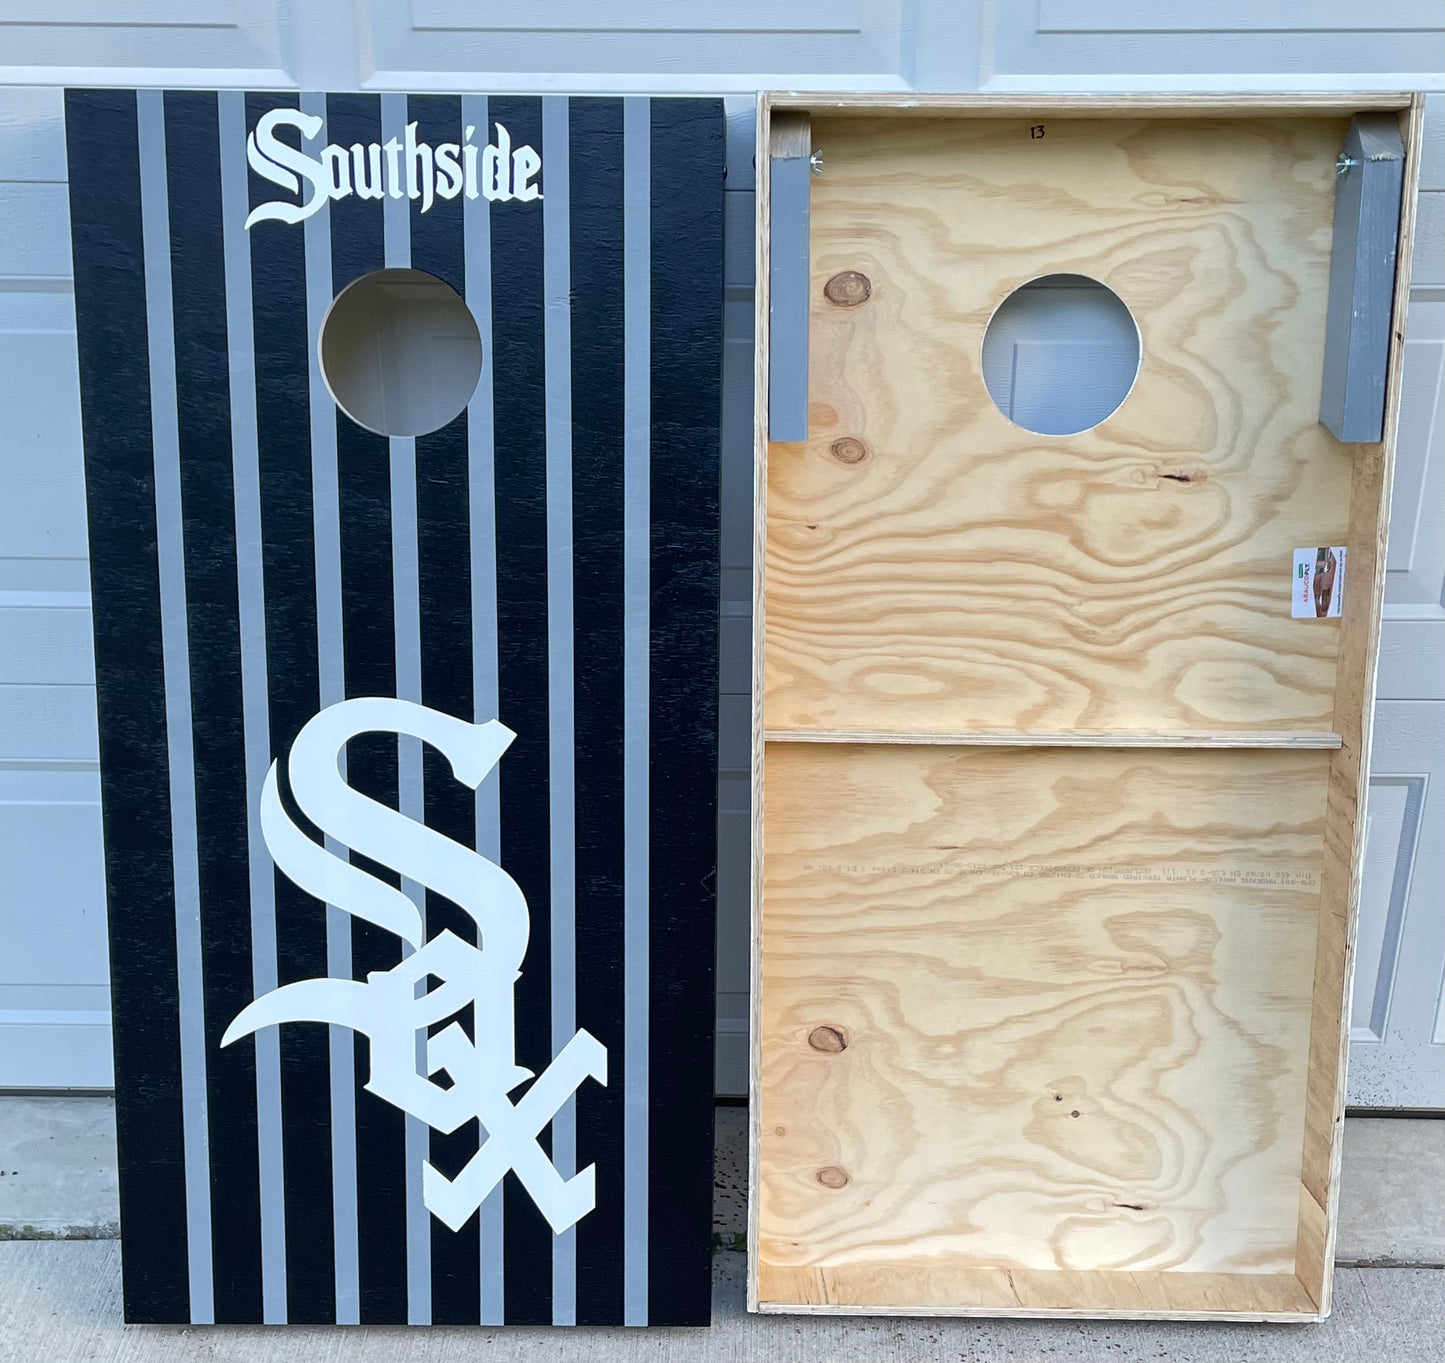 Sox "South Side" Pinstripe Cornhole Set